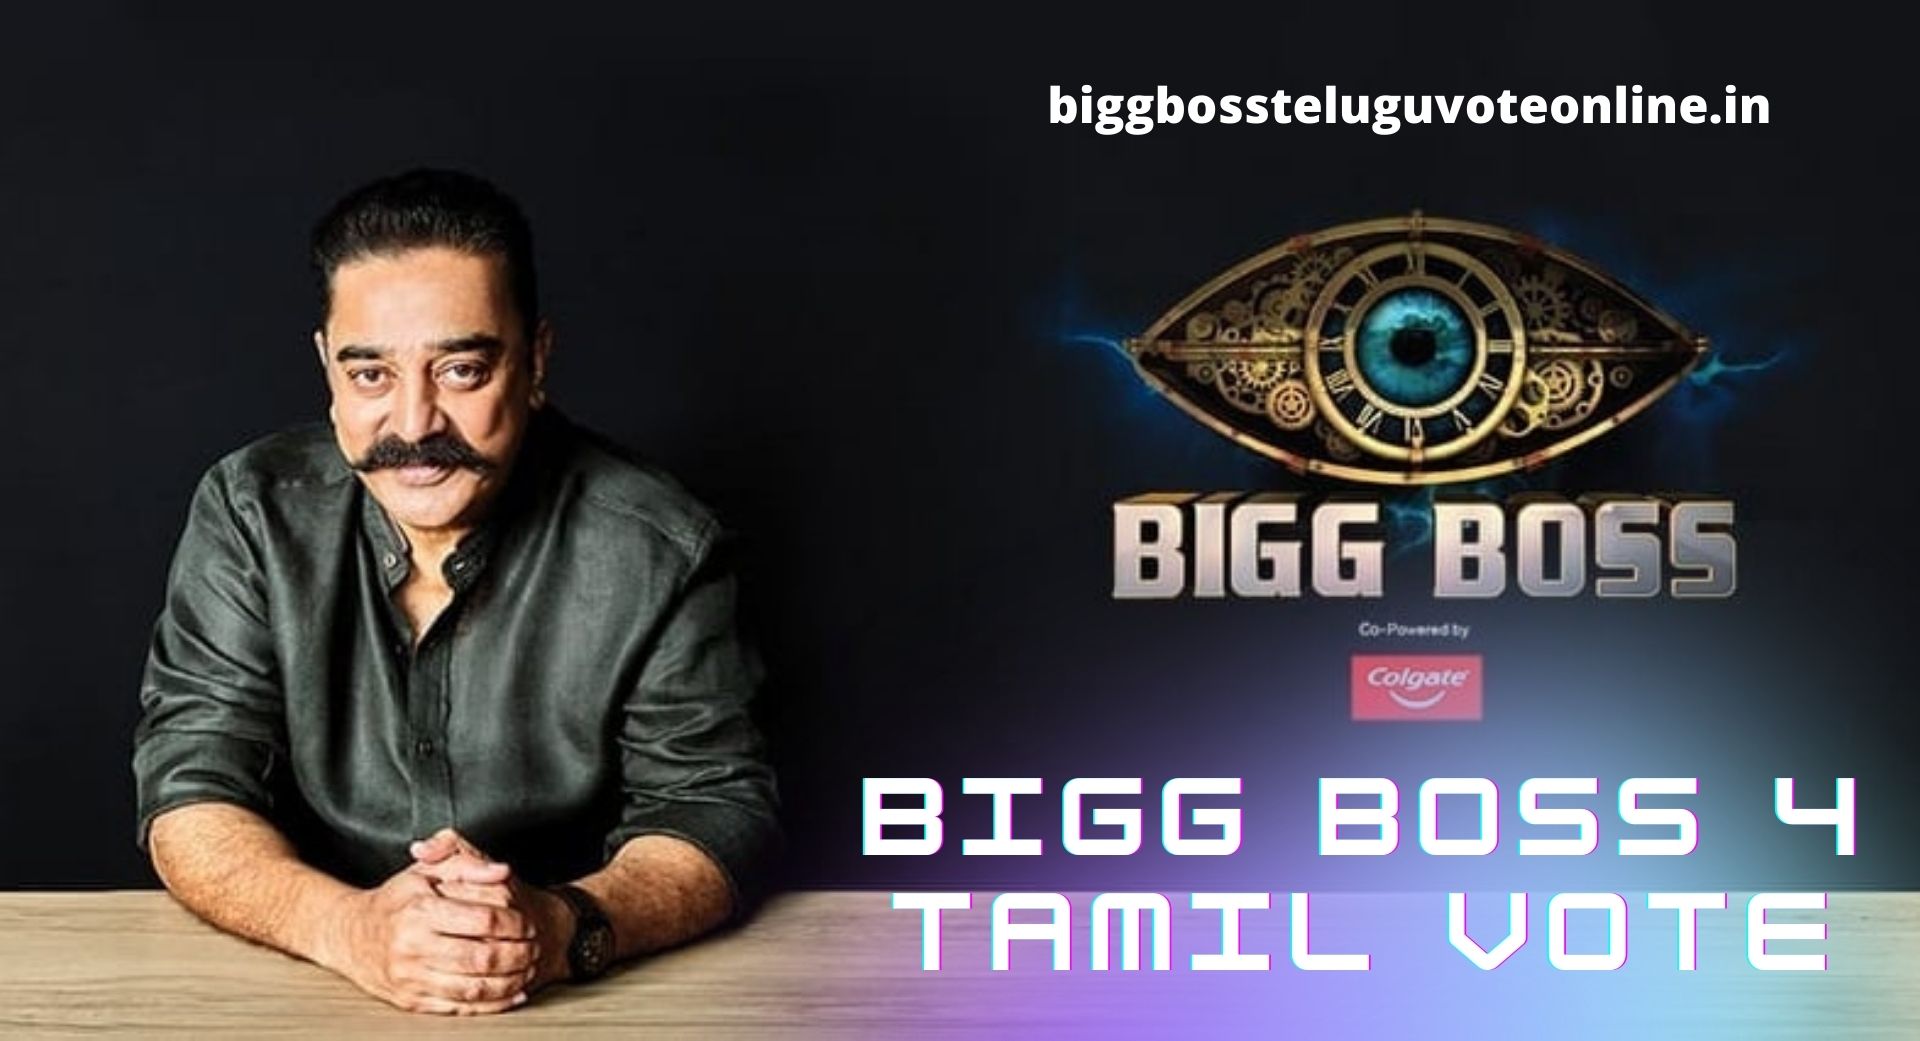 Bigg Boss 4 Tamil Vote Online Bb4 Tamil Voting Results Bigg boss tamil vote aka bigg boss tamil season 4 voting has started. bigg boss 4 tamil vote online bb4